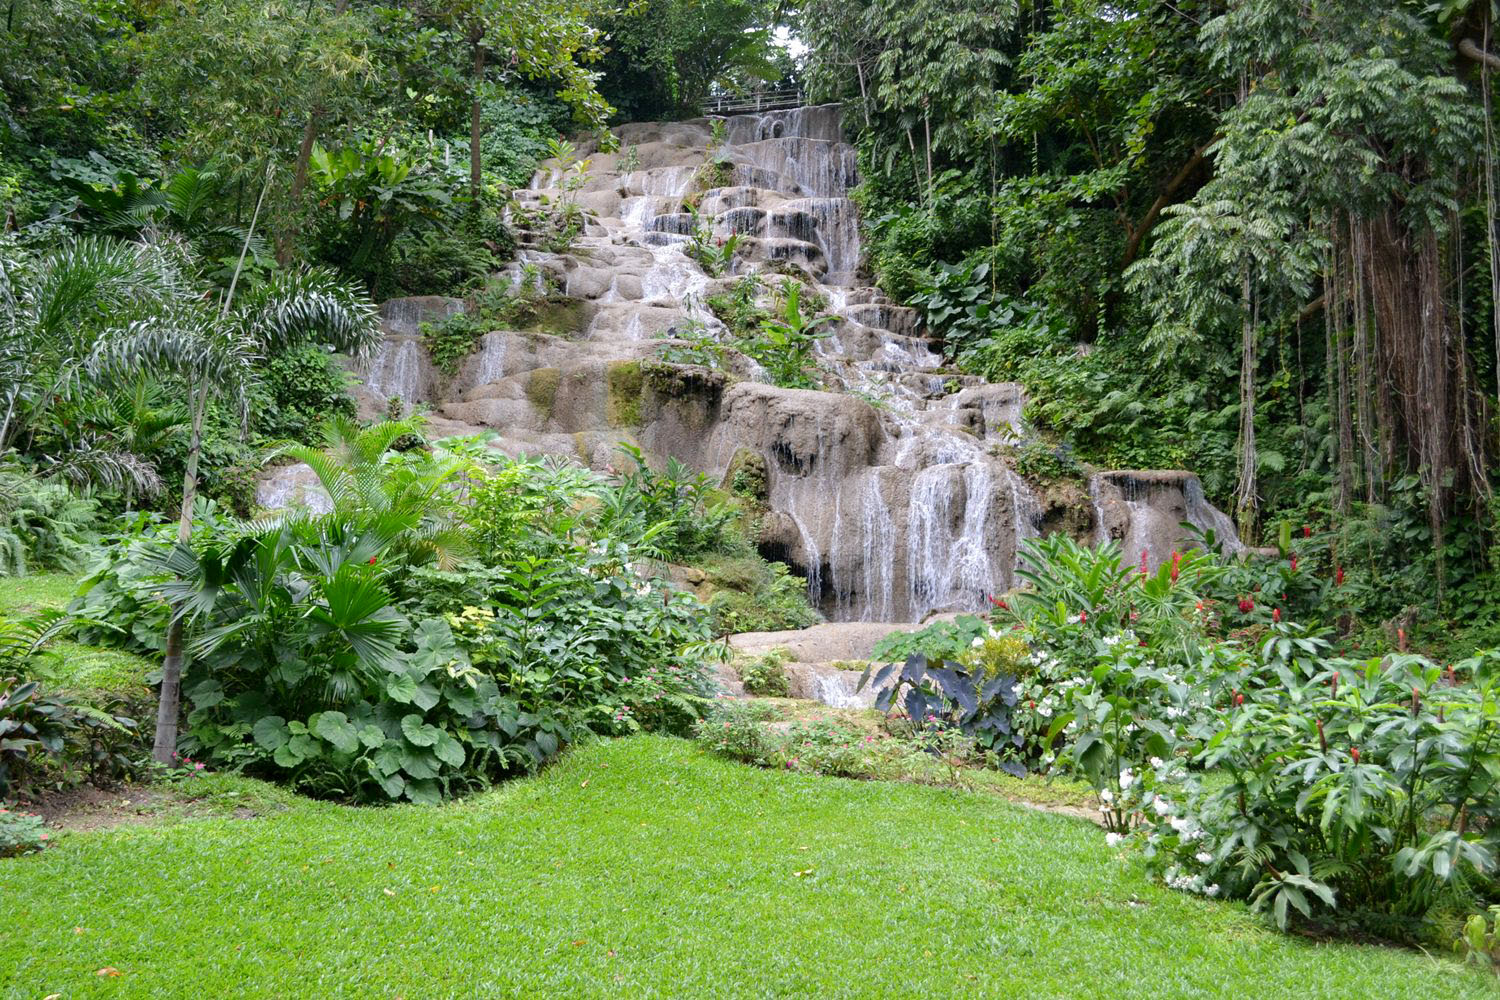 kokono falls jamaica